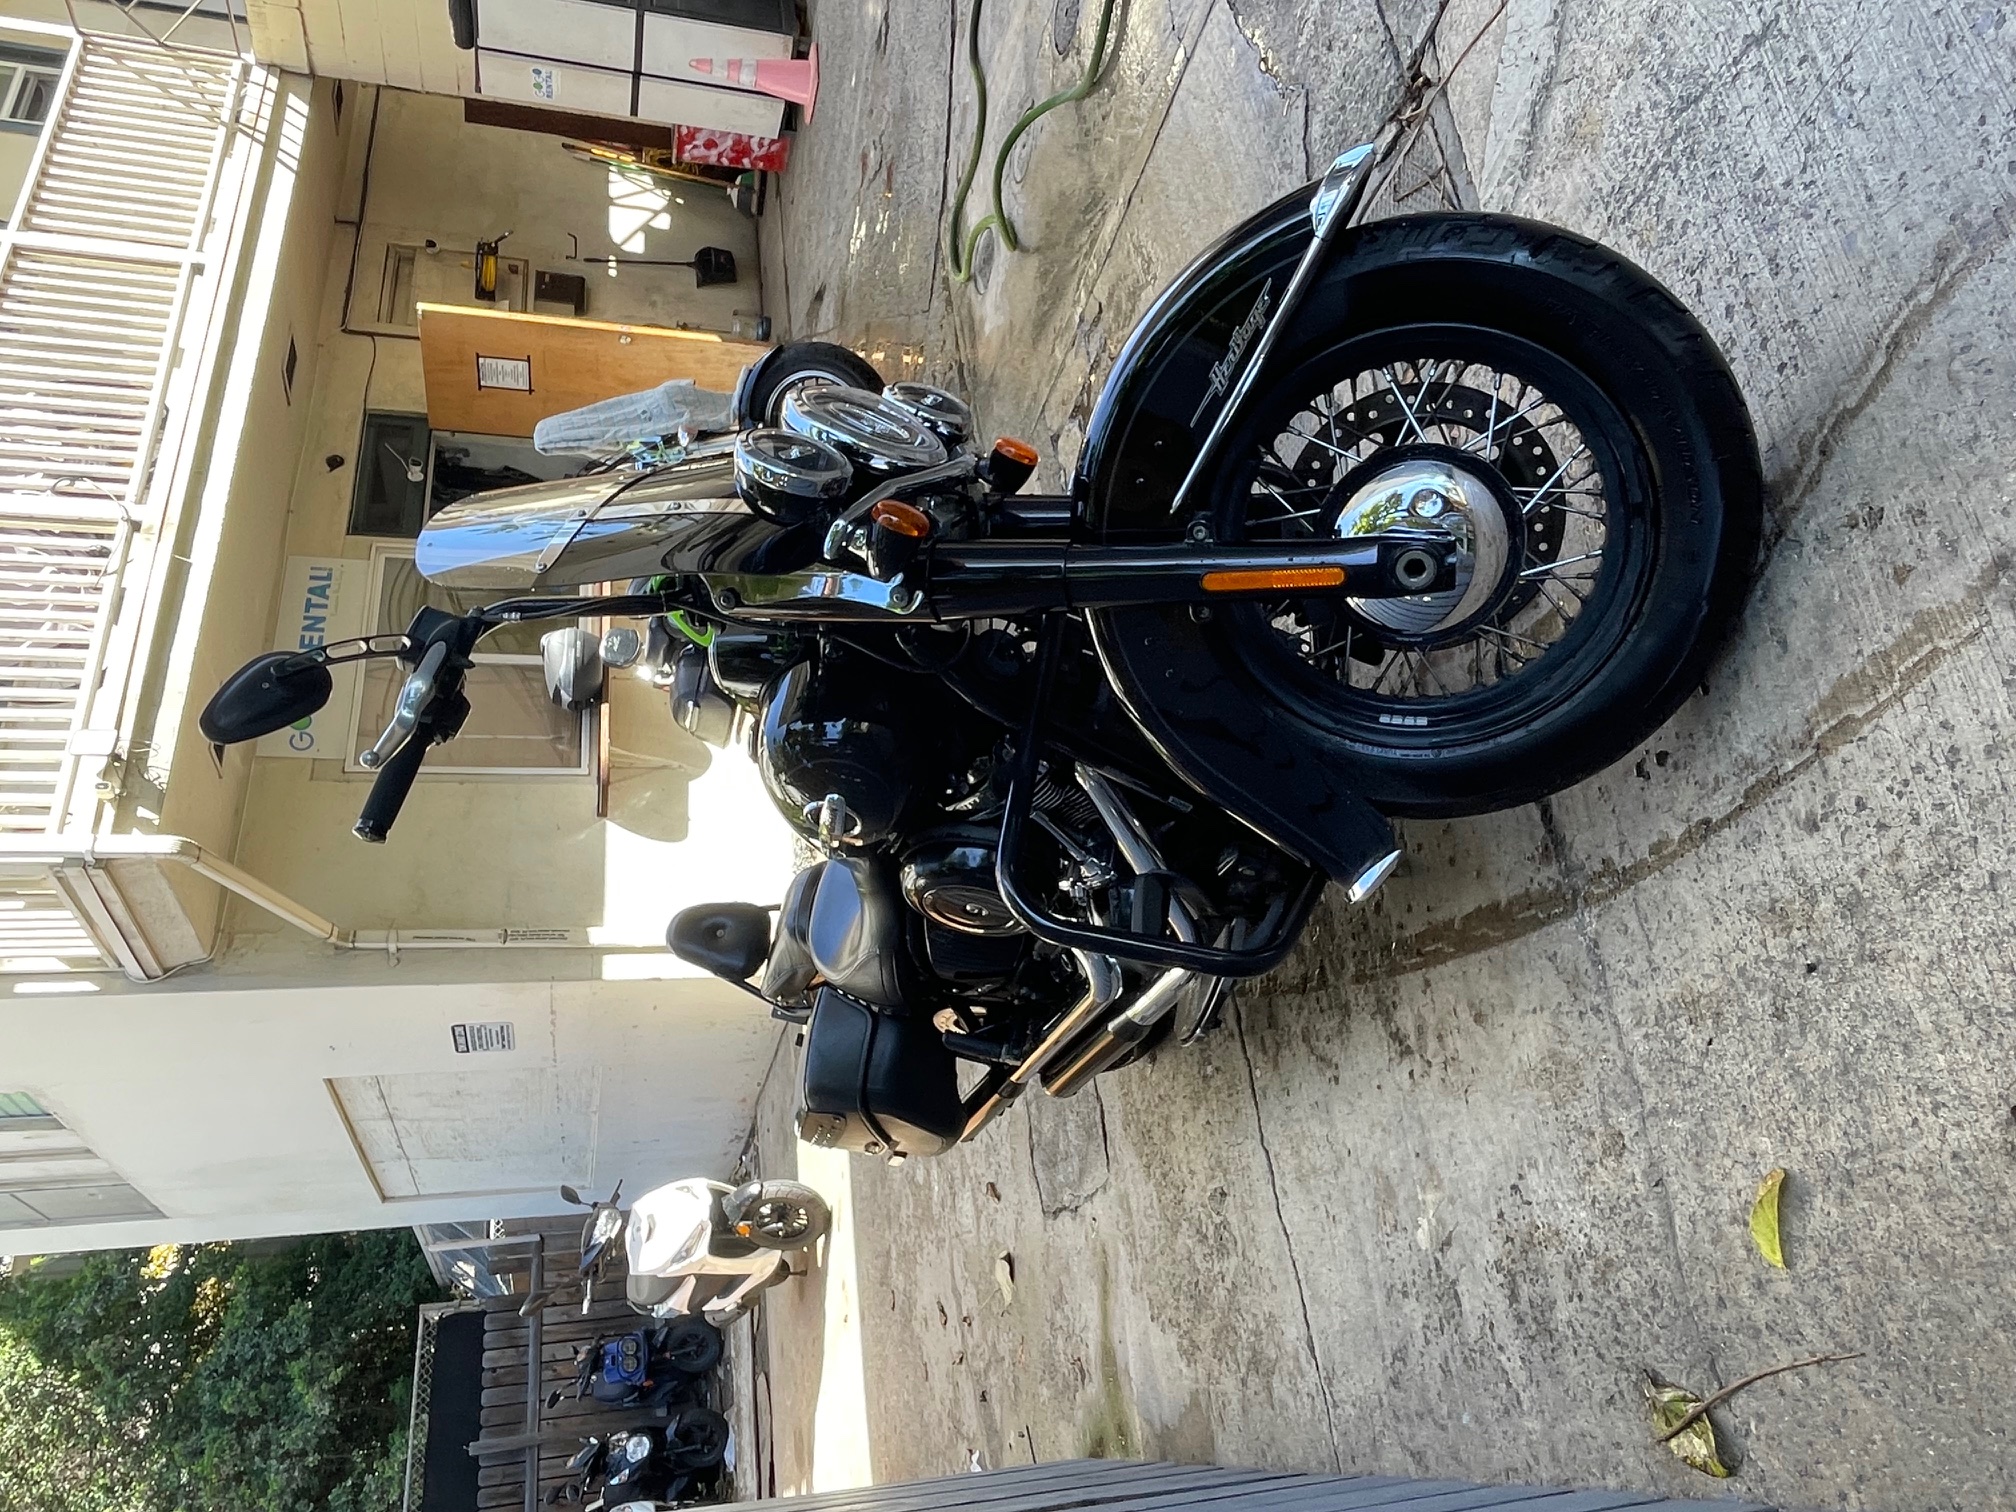 2019 Harley Davidson Heritage Softail